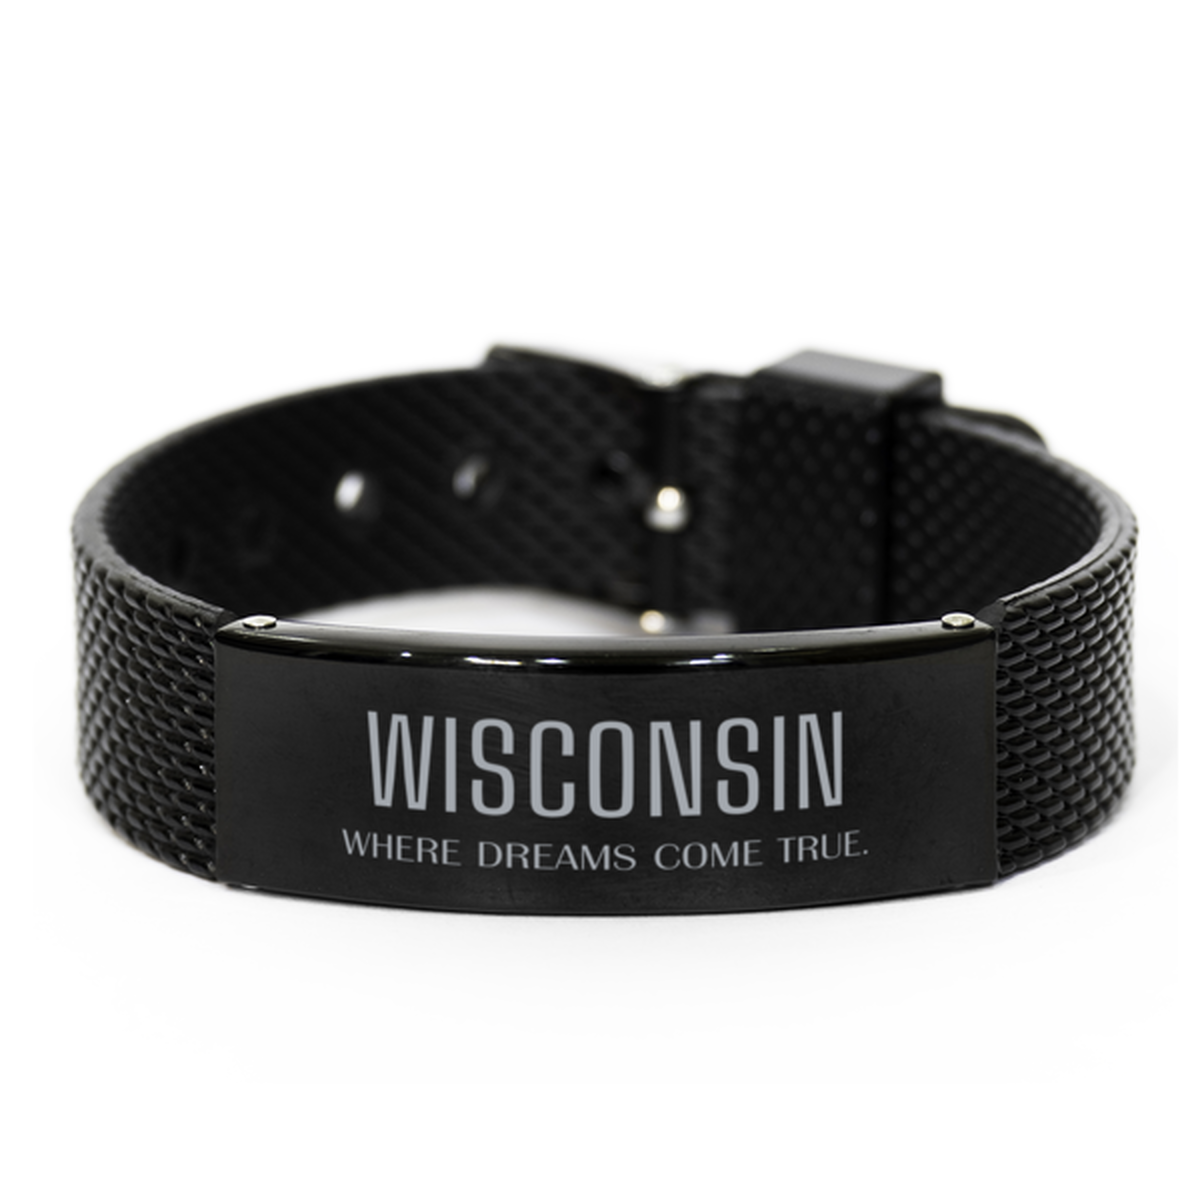 Love Wisconsin State Black Shark Mesh Bracelet, Wisconsin Where dreams come true, Birthday Inspirational Gifts For Wisconsin Men, Women, Friends